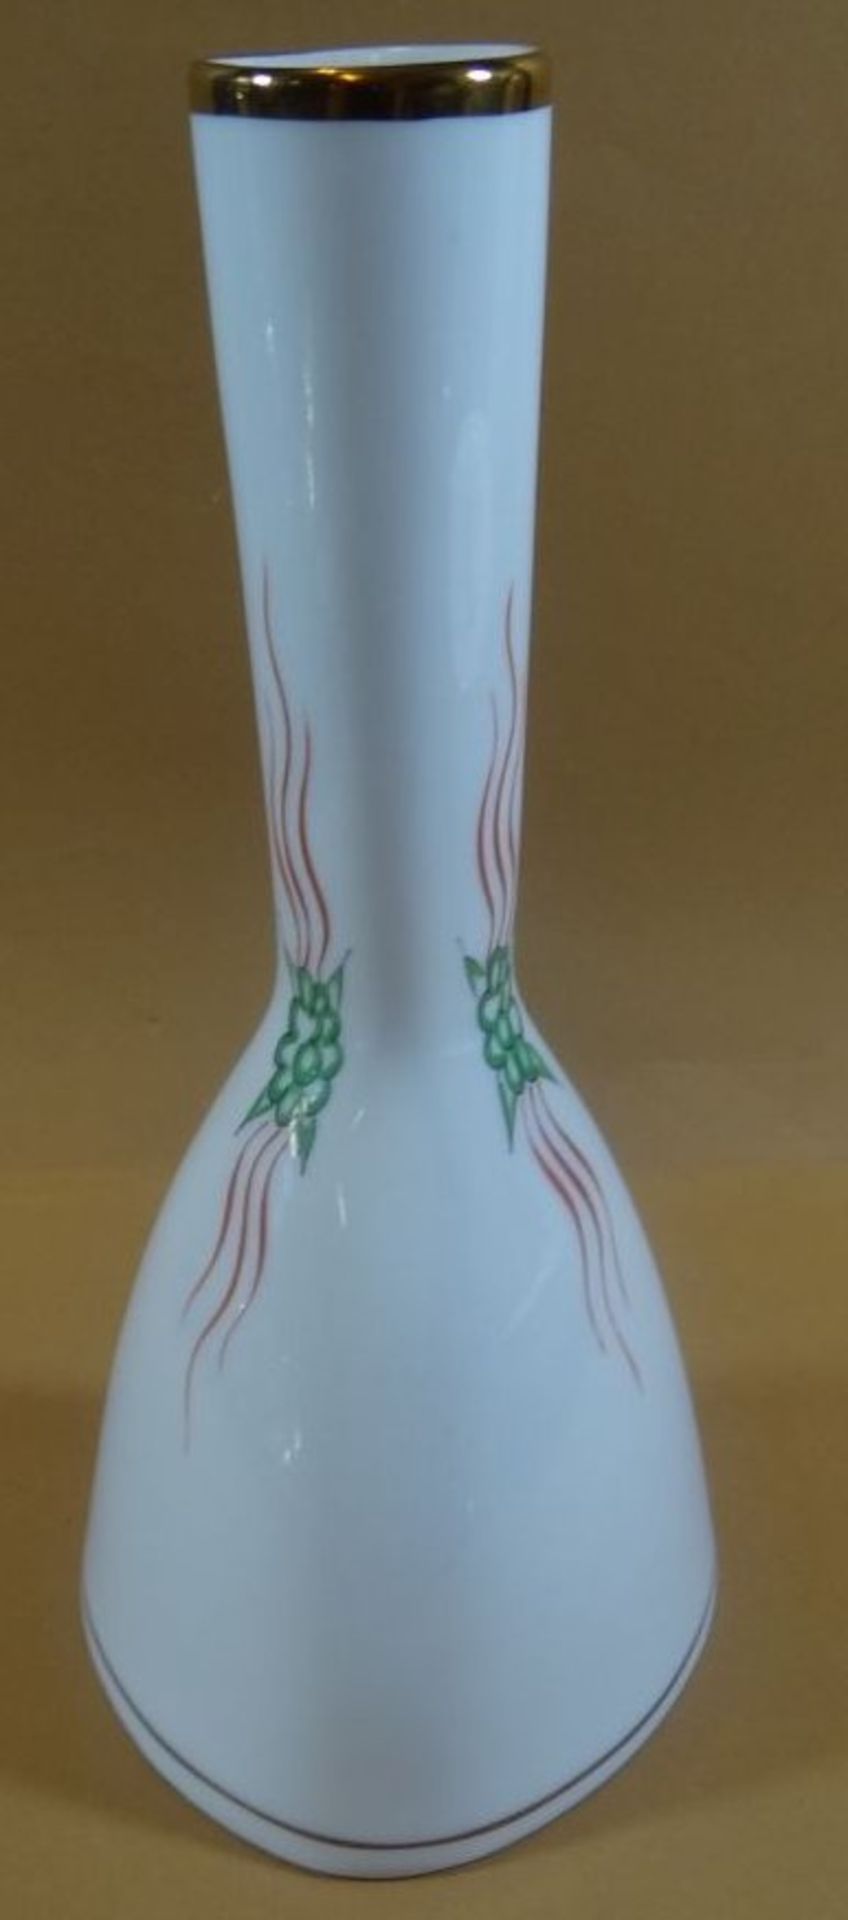 Vase, Grüner Drache, B. Hauswald handgemalt Freiberg/Sachsen, H-24 cm - Image 3 of 4